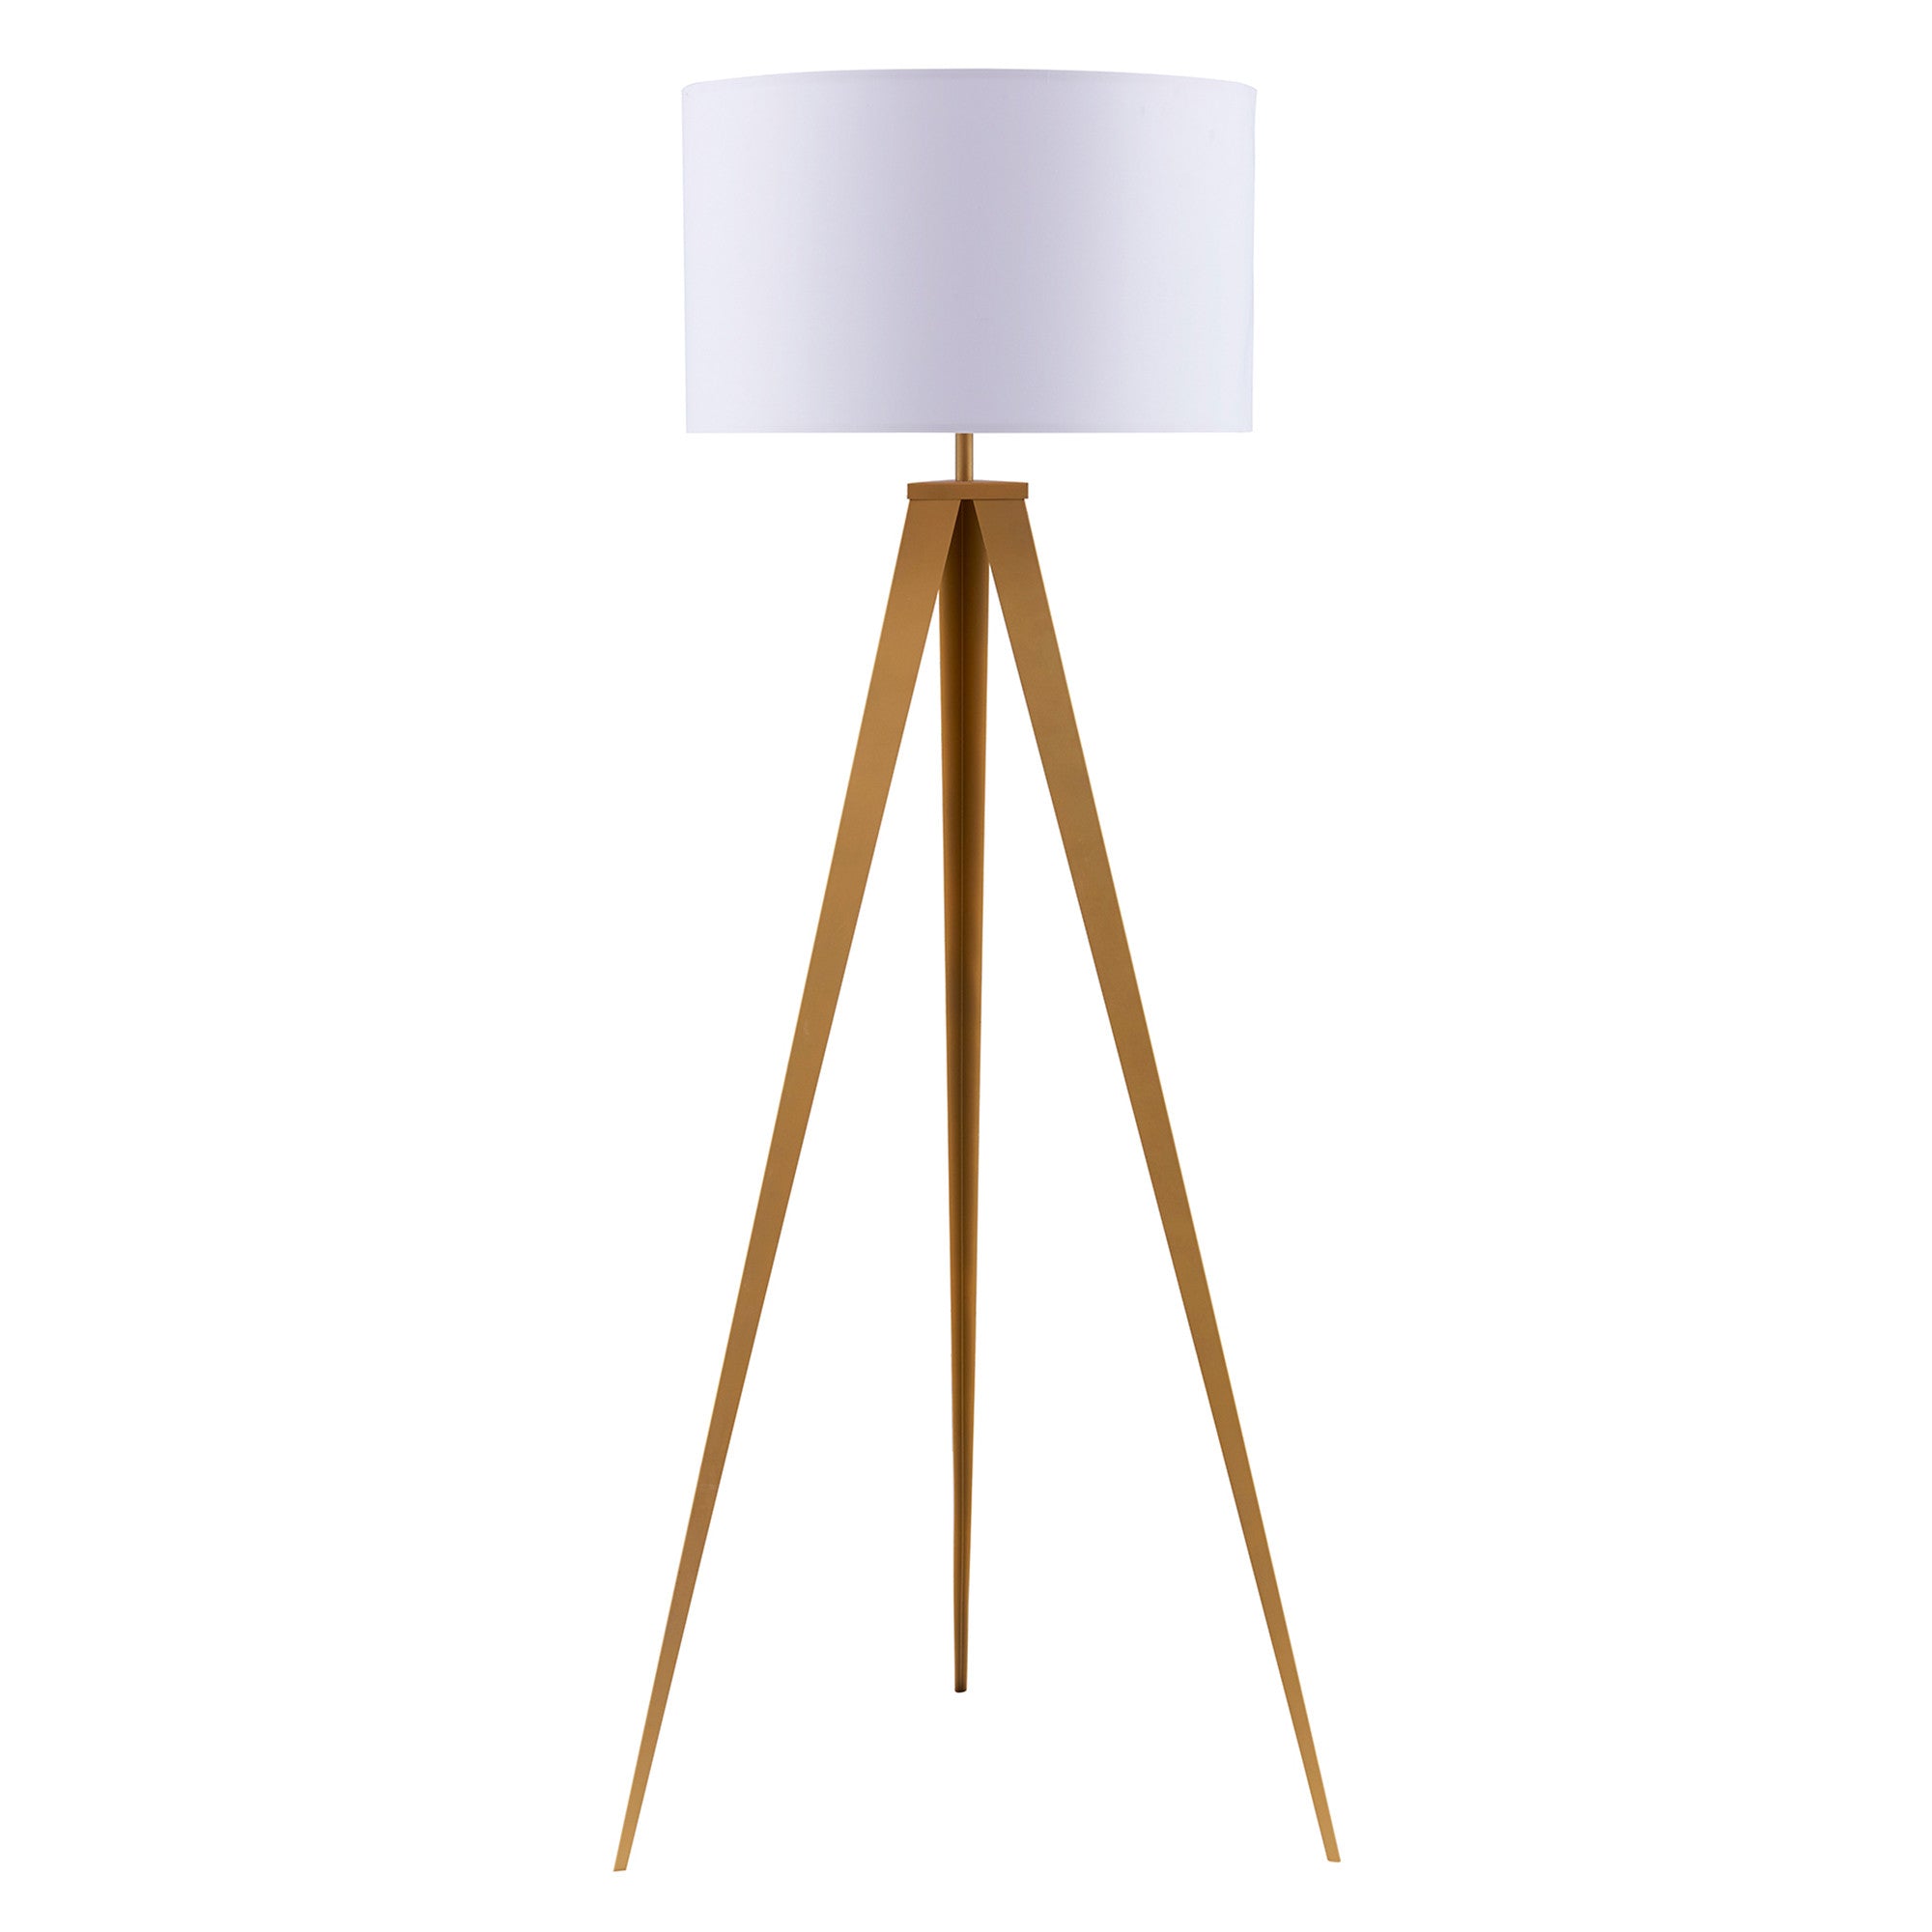 Teamson Home Romanza 62" Postmodern Tripod Floor Lamp with Drum Shade, Matte Gold/White